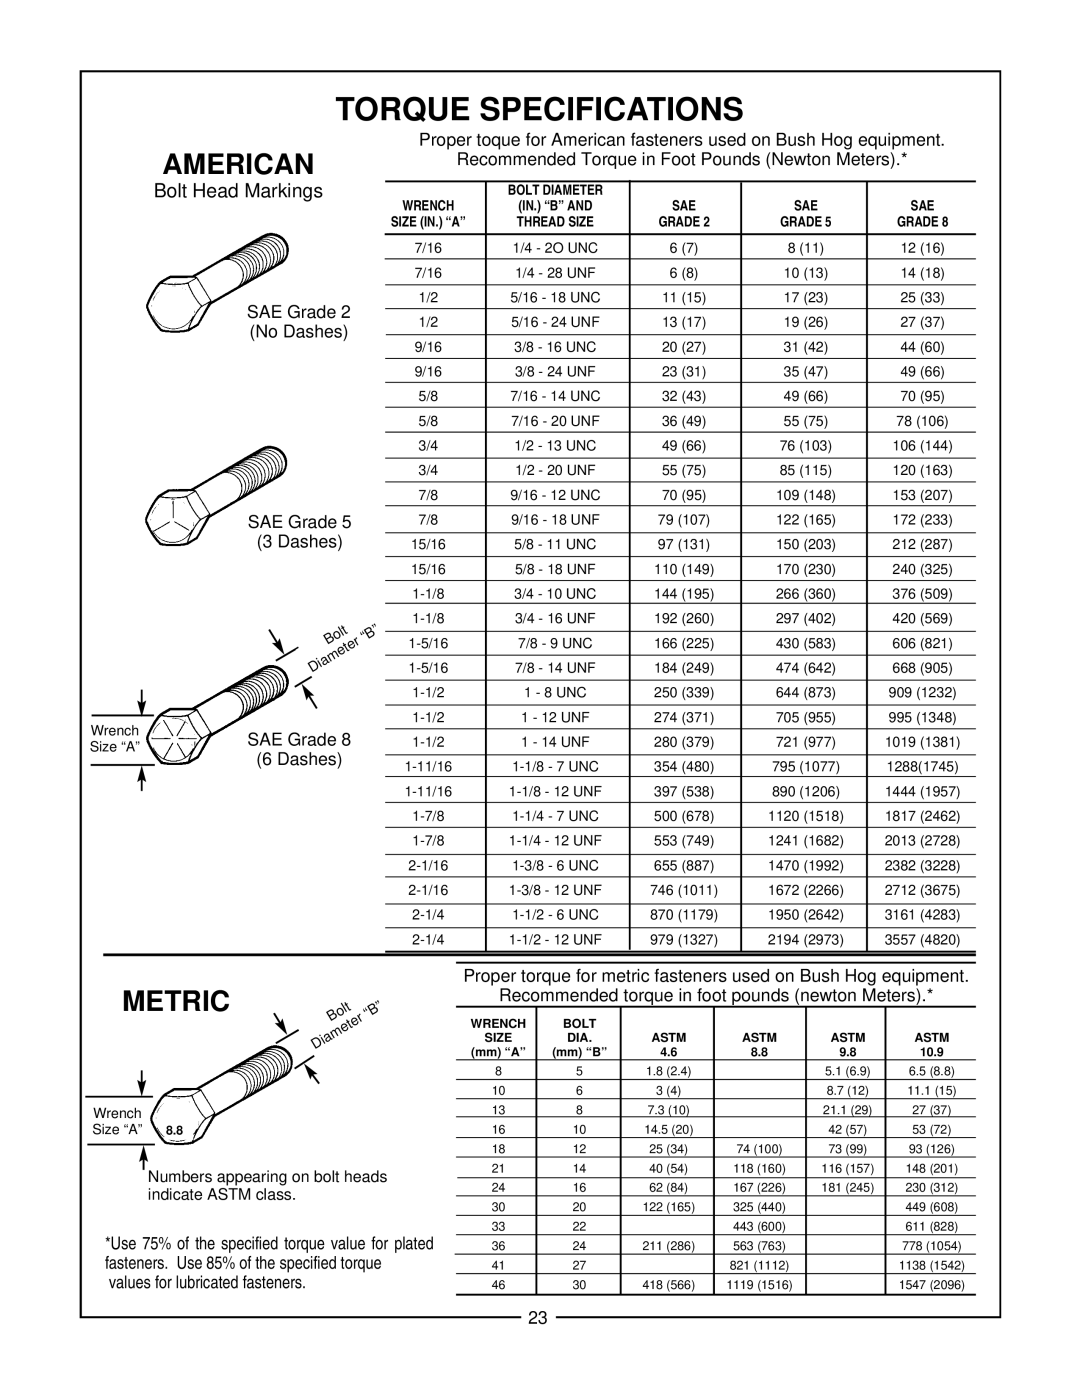 Bush Hog Estate Series manual Torque Specifications, American, Metric, Bolt Head Markings 